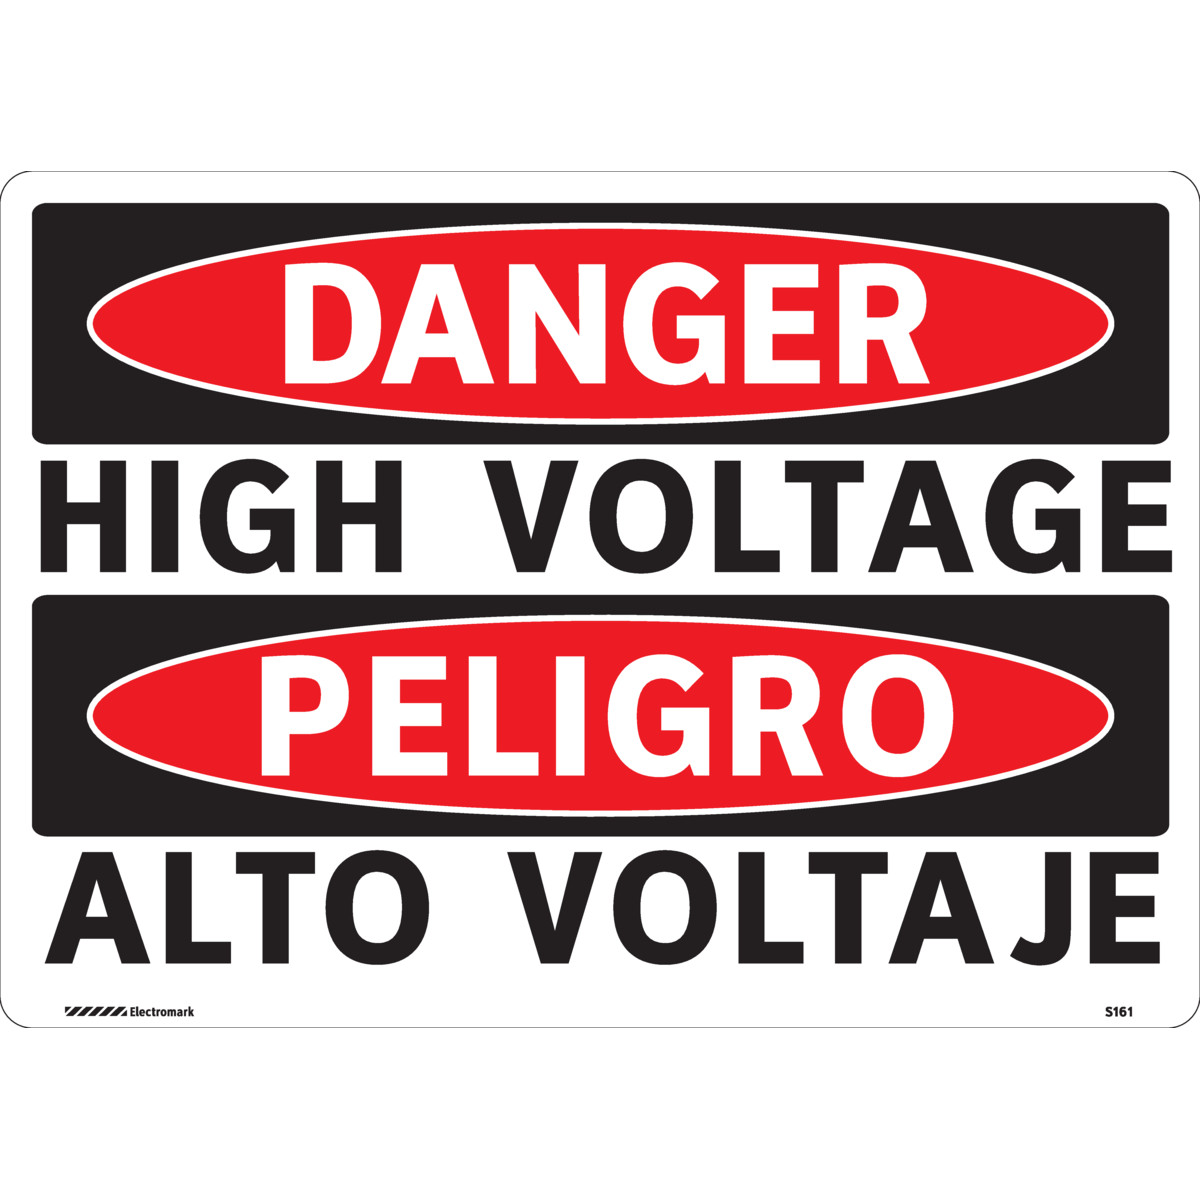 OSHA Bilingual Danger High Voltage Sign